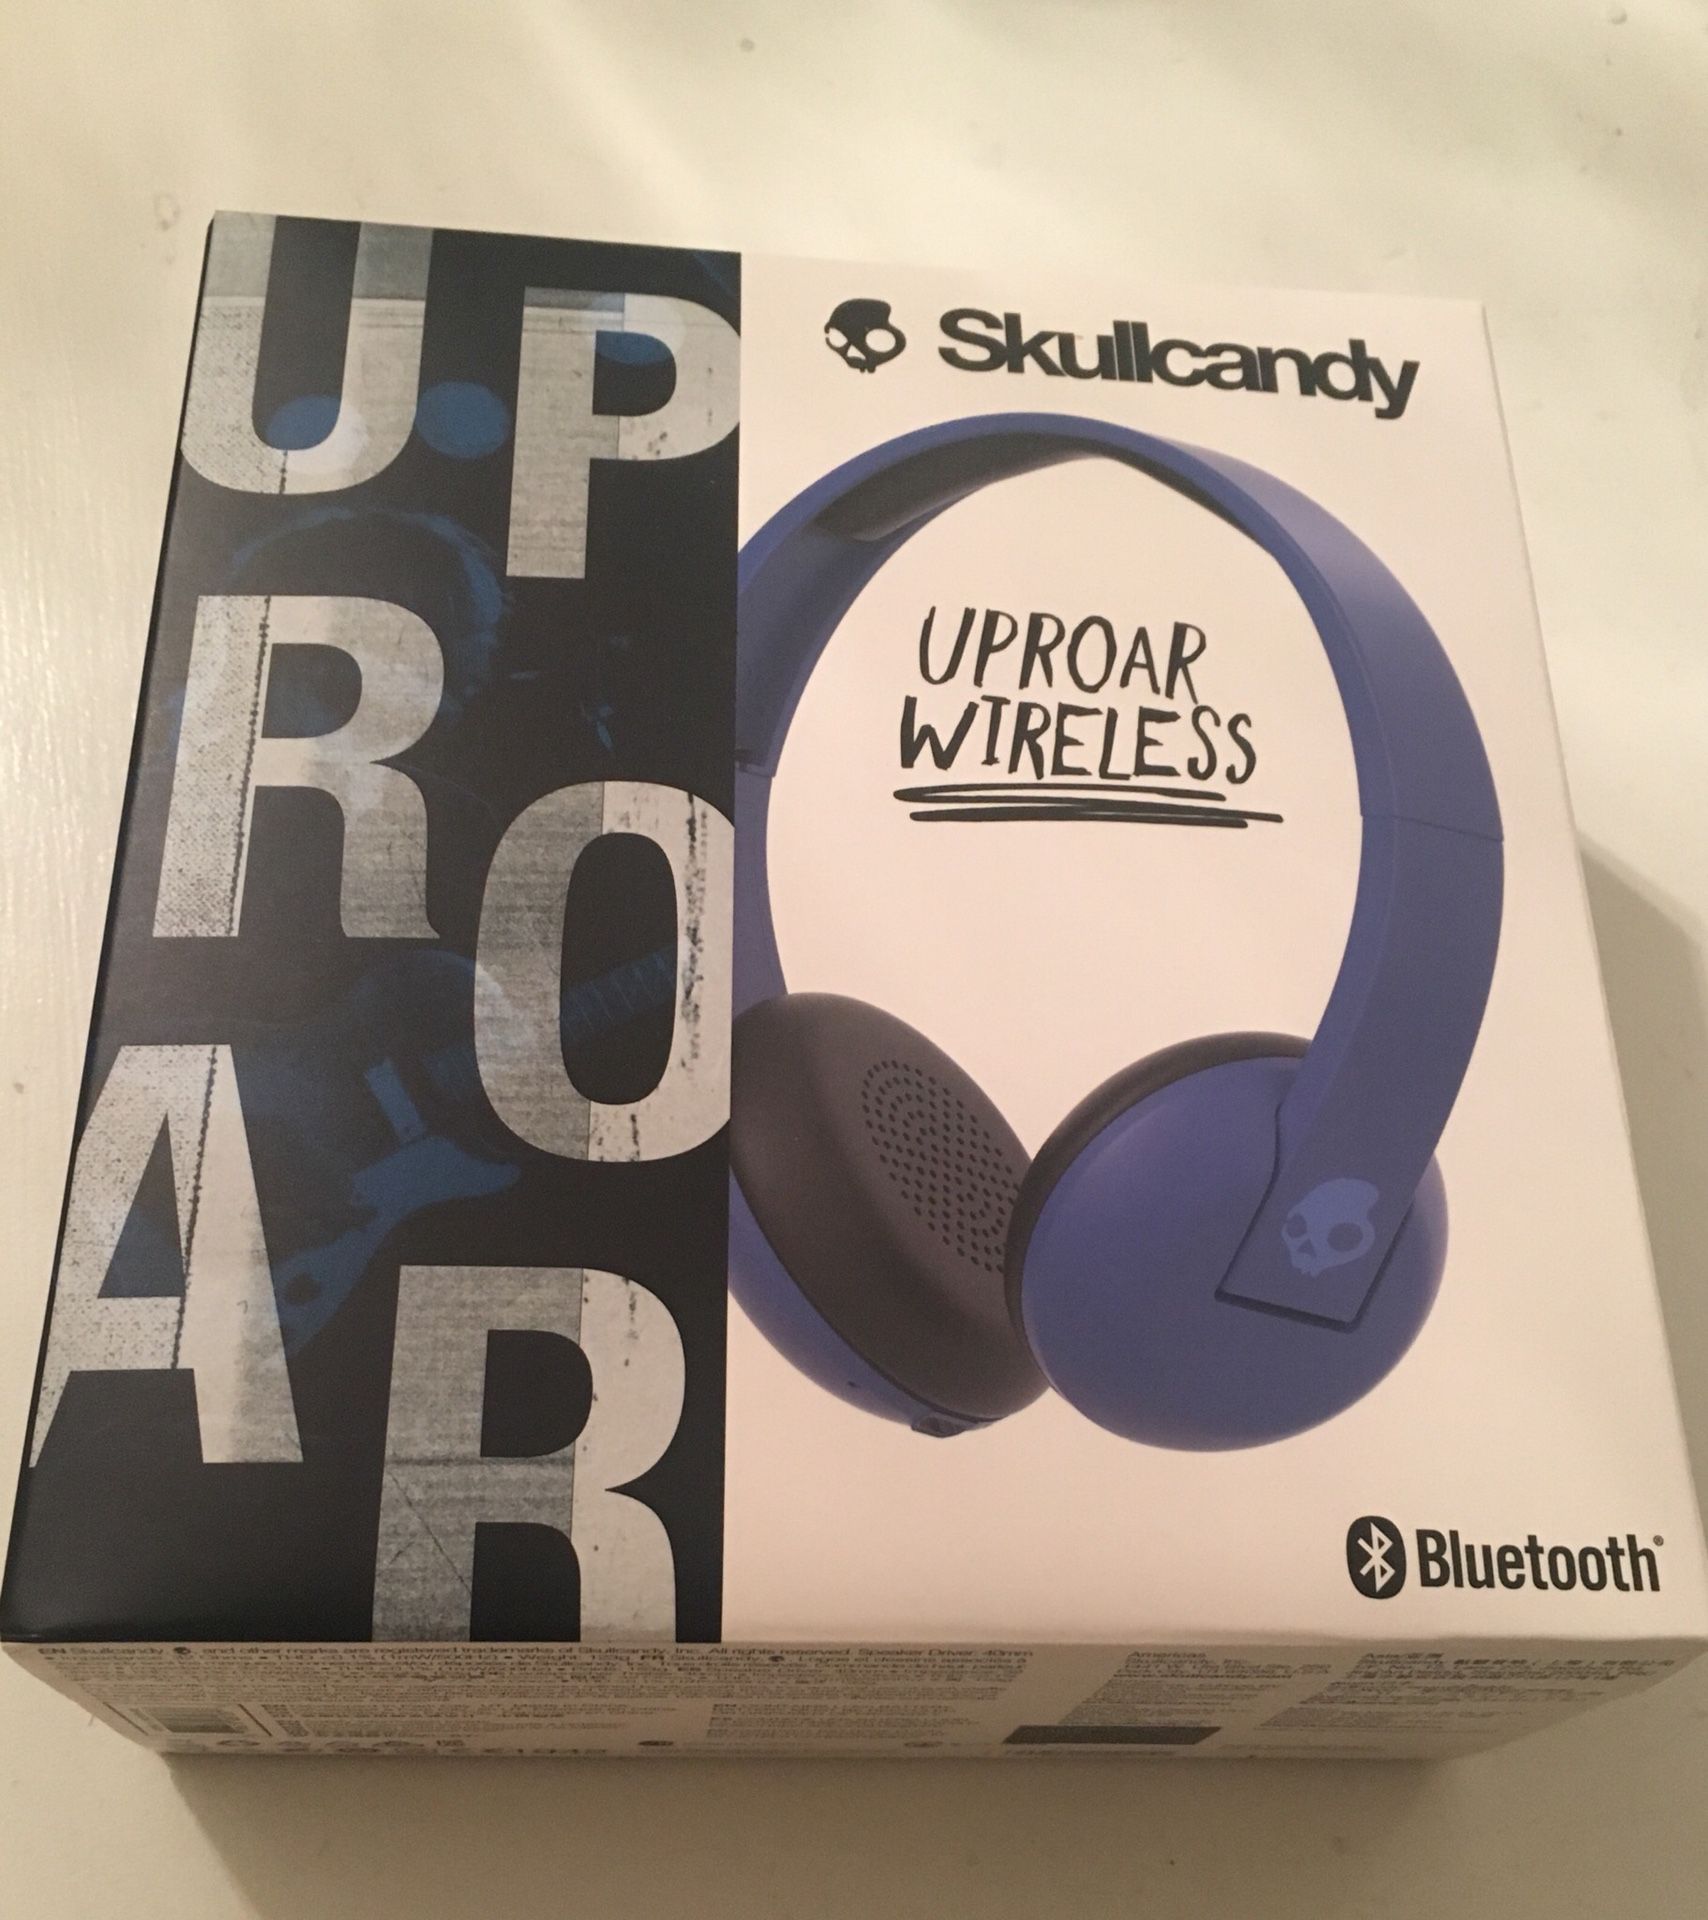 Brand New Skullcandy Uproar Wireless Headphones With Bluetooth